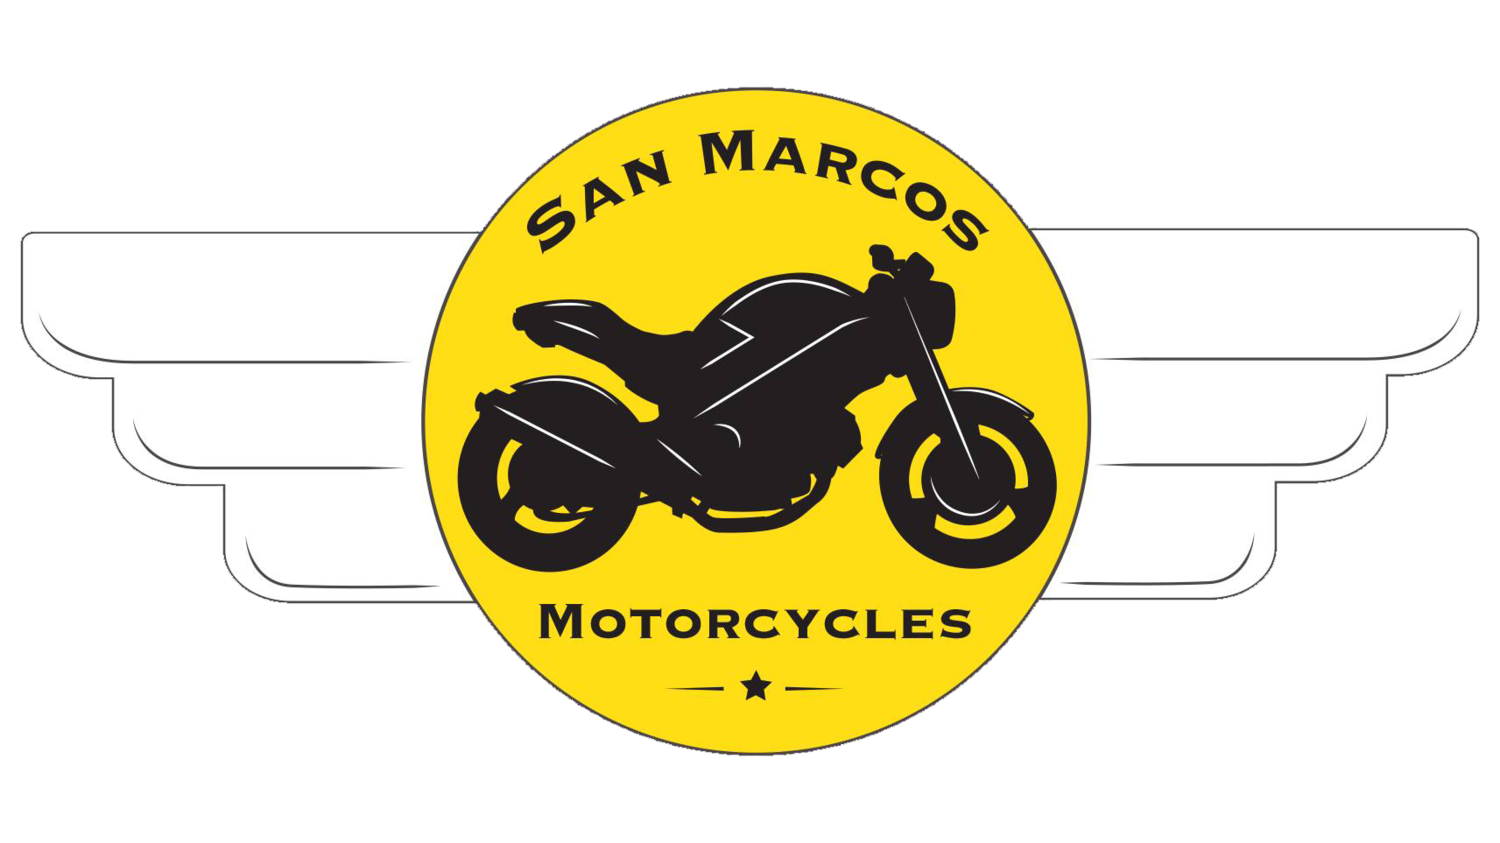 San Marcos Motorcycles